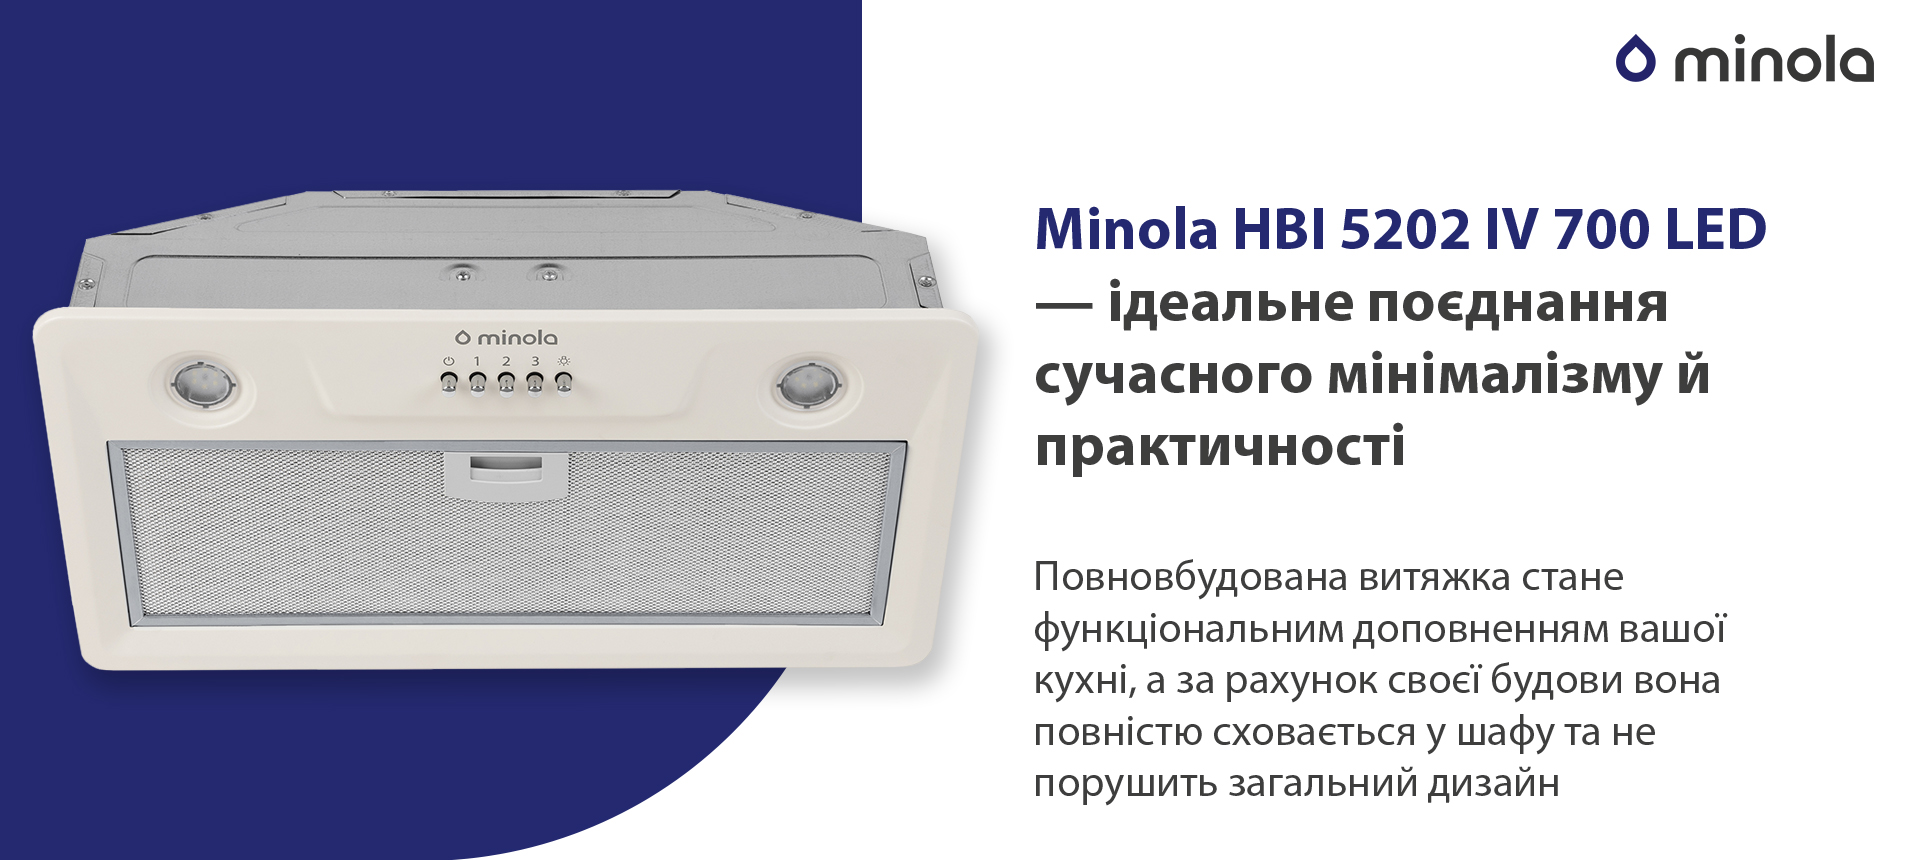 Minola HBI 5202 IV 700 LED в магазине в Киеве - фото 10